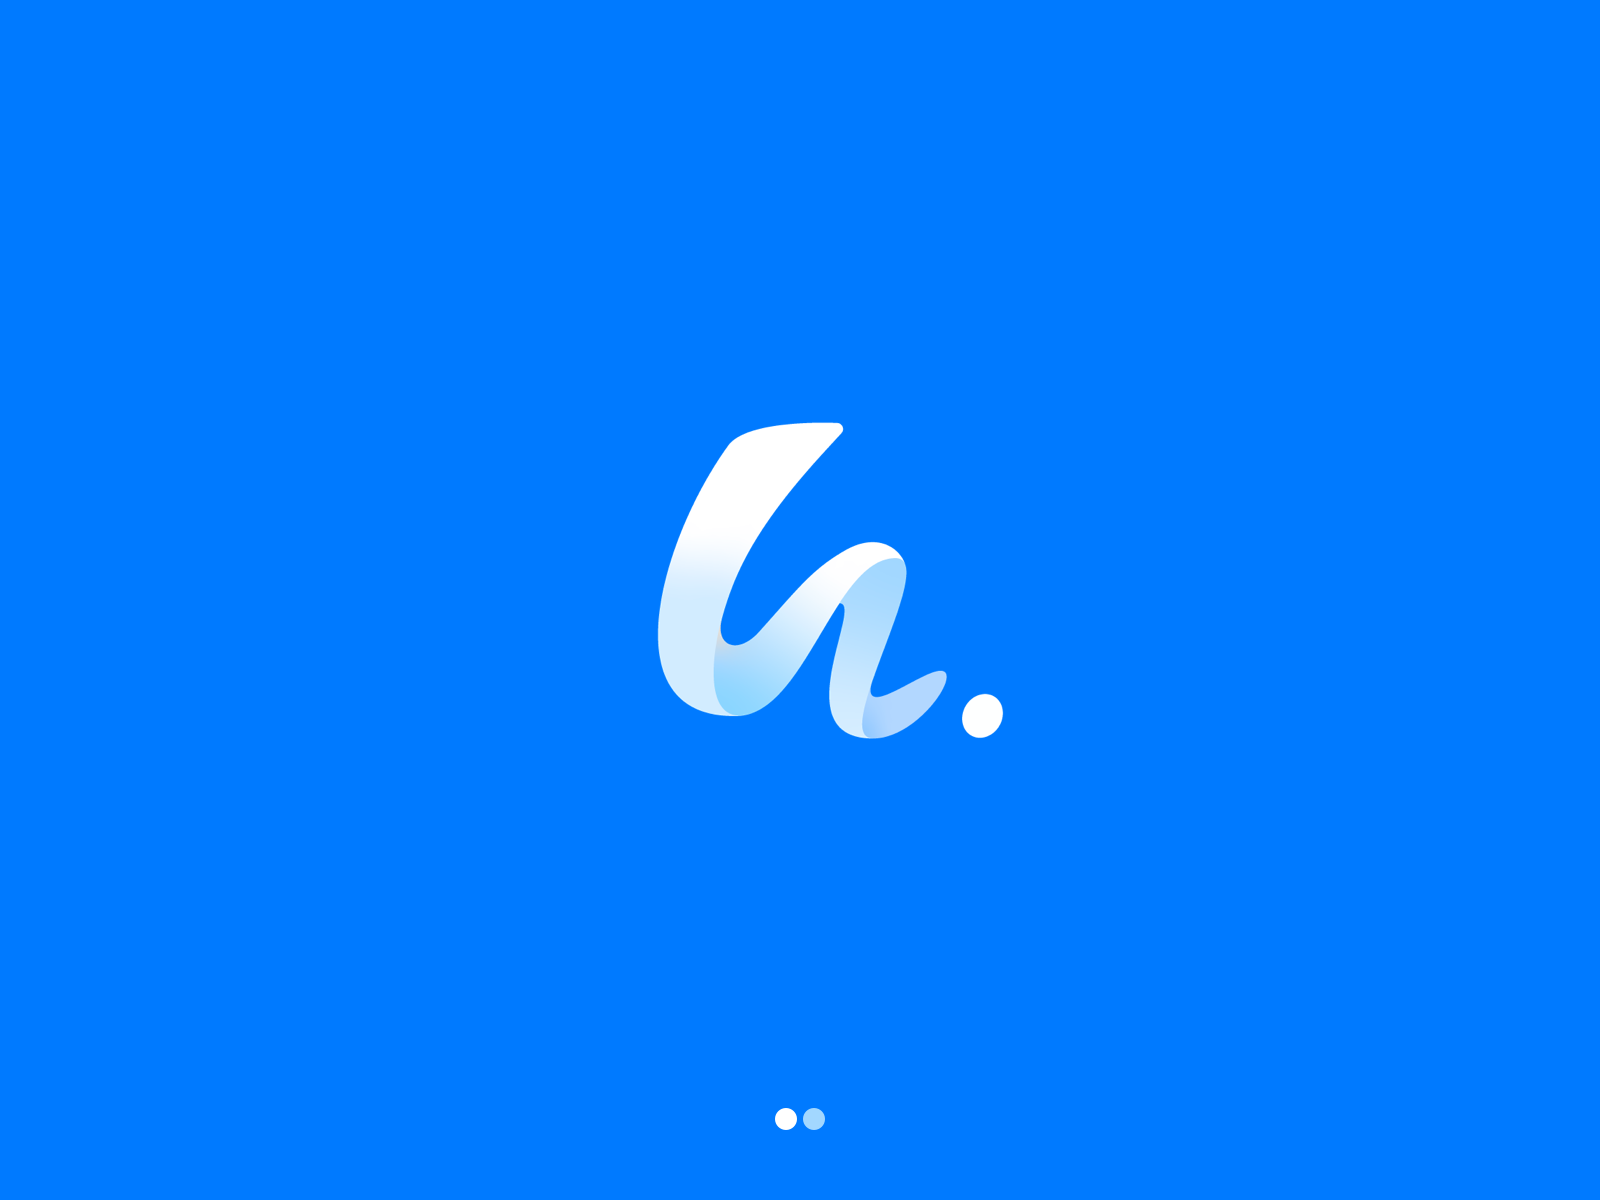 h | Logo concept by Nastya Vlasenko on Dribbble